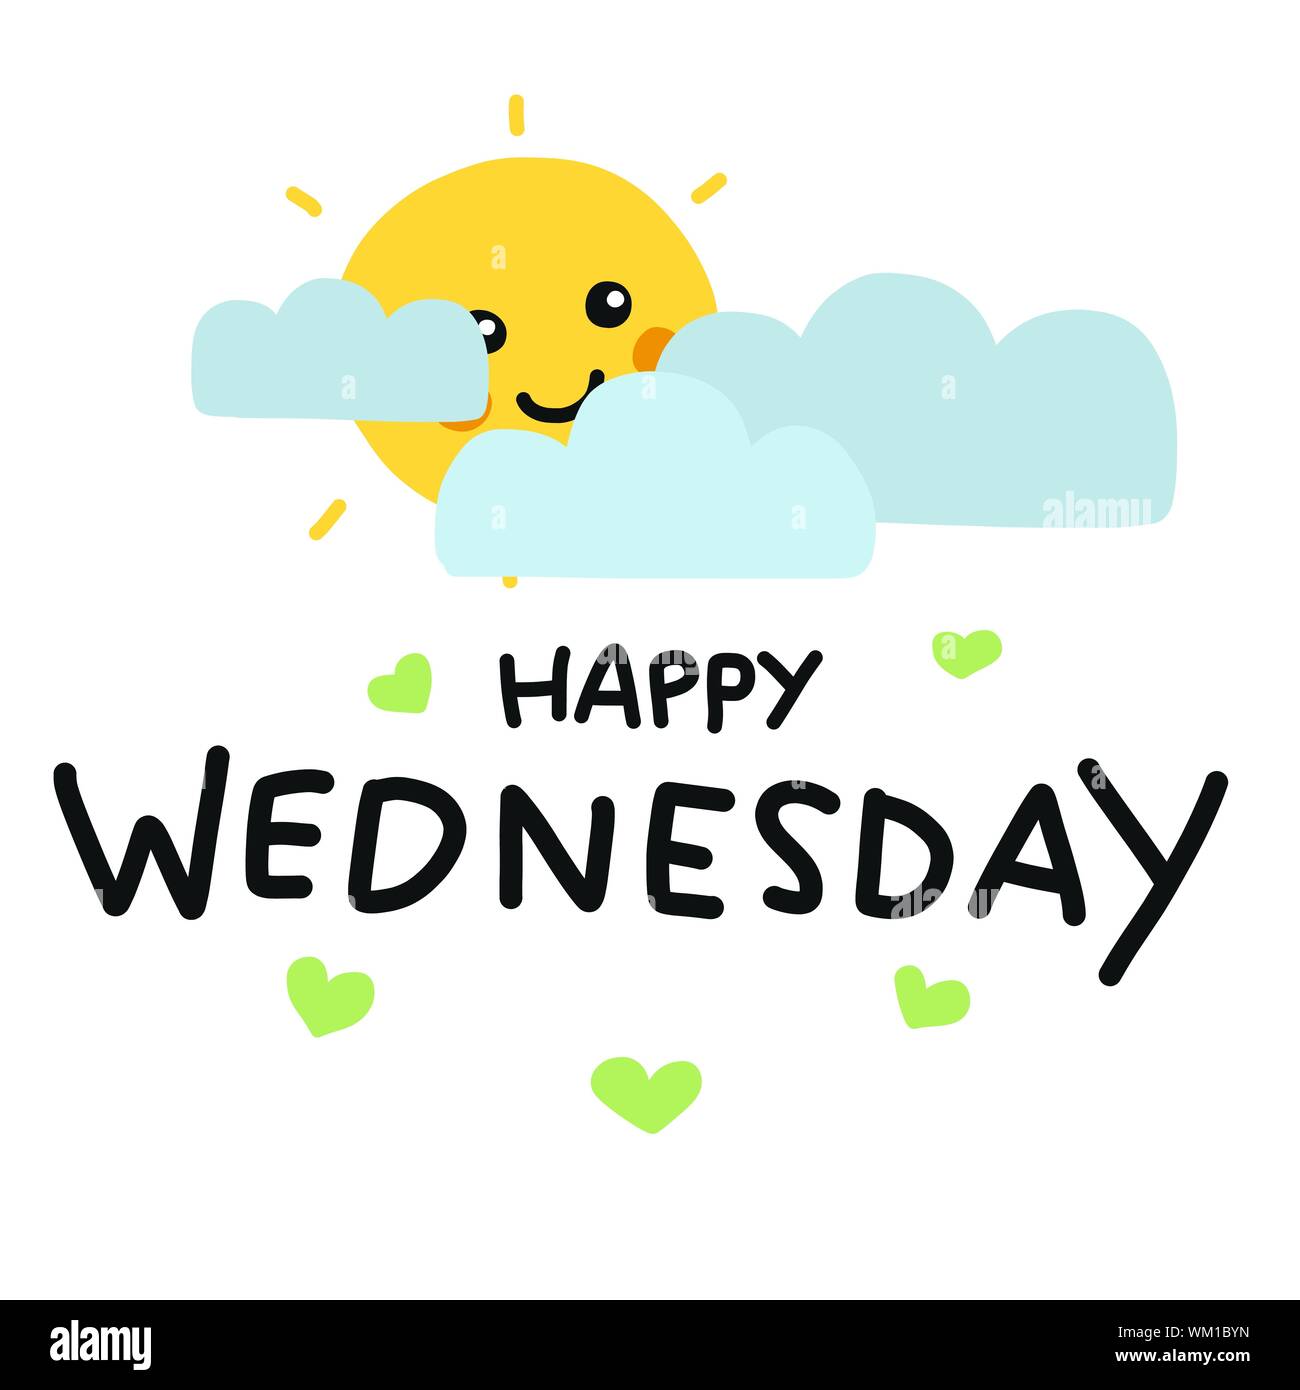 Happy Wednesday cute sun smile and cloud cartoon vector ...